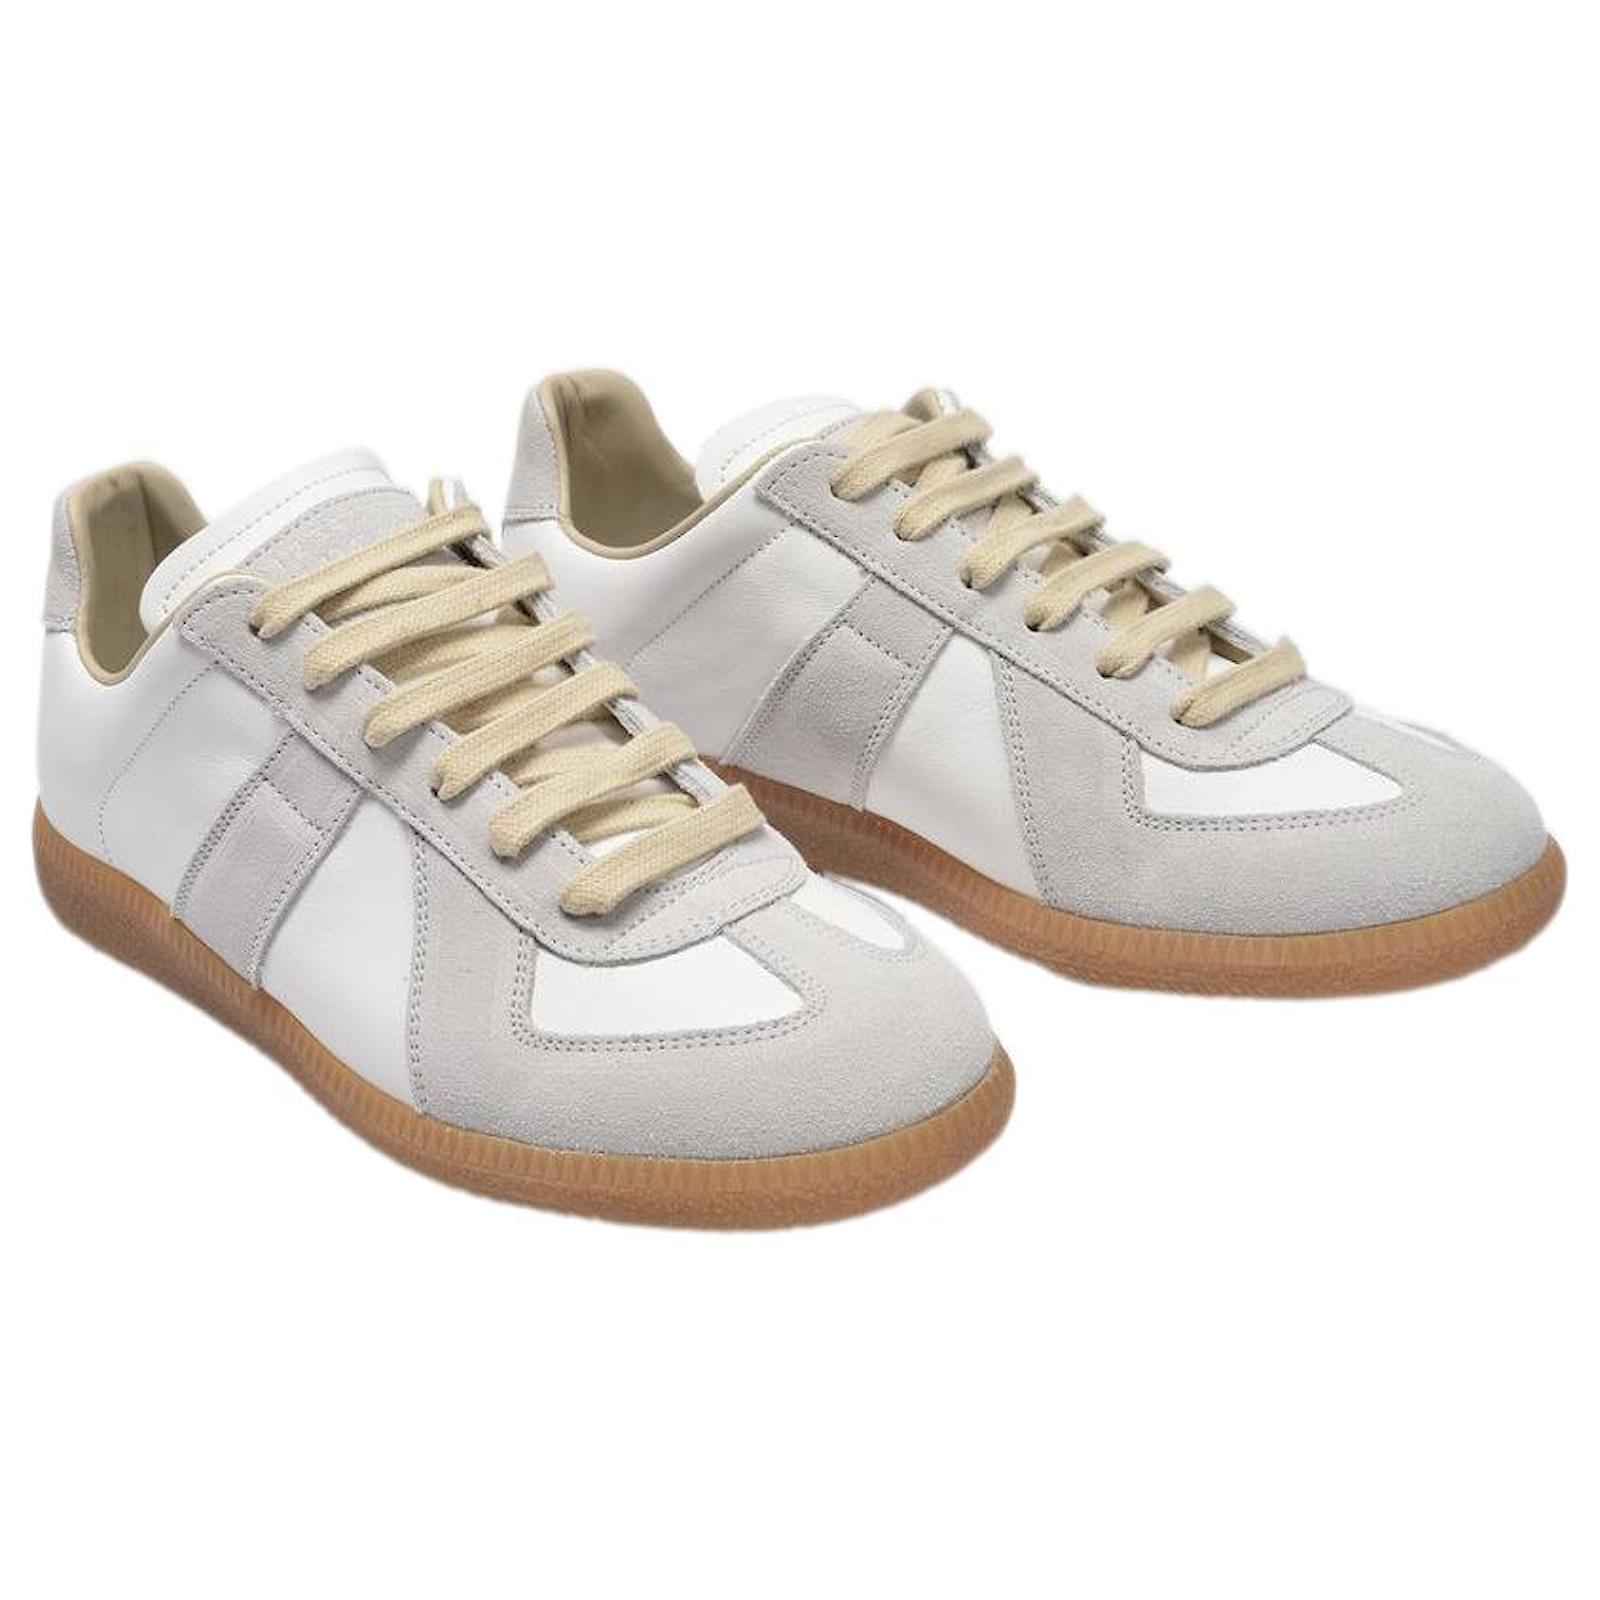 Maison Martin Margiela Replica Sneakers in Brown Leather White ref ...